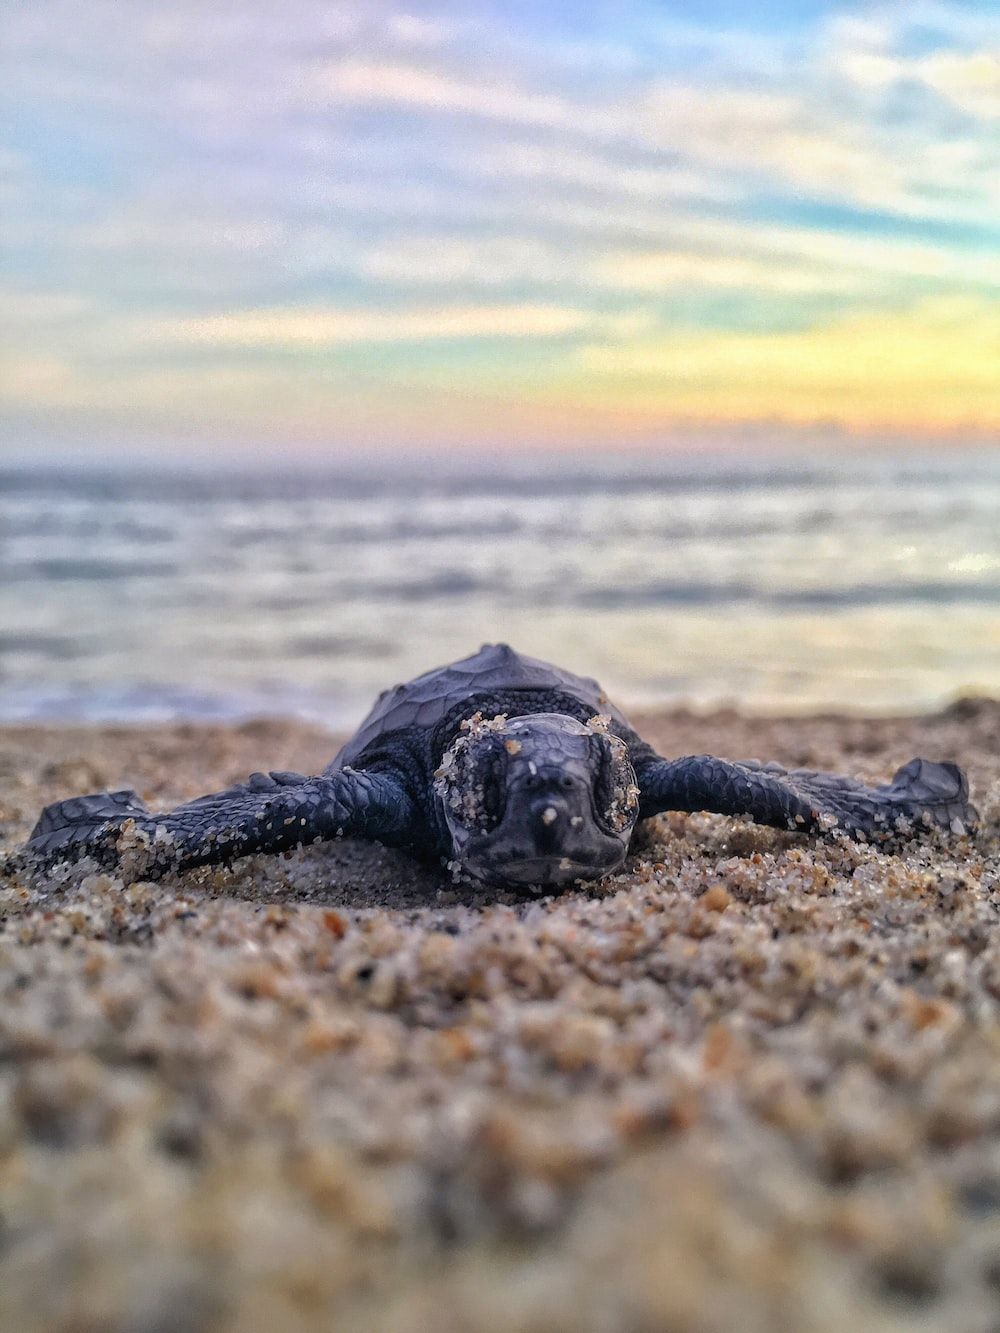 A baby sea turtle on the beach - Sea turtle, turtle